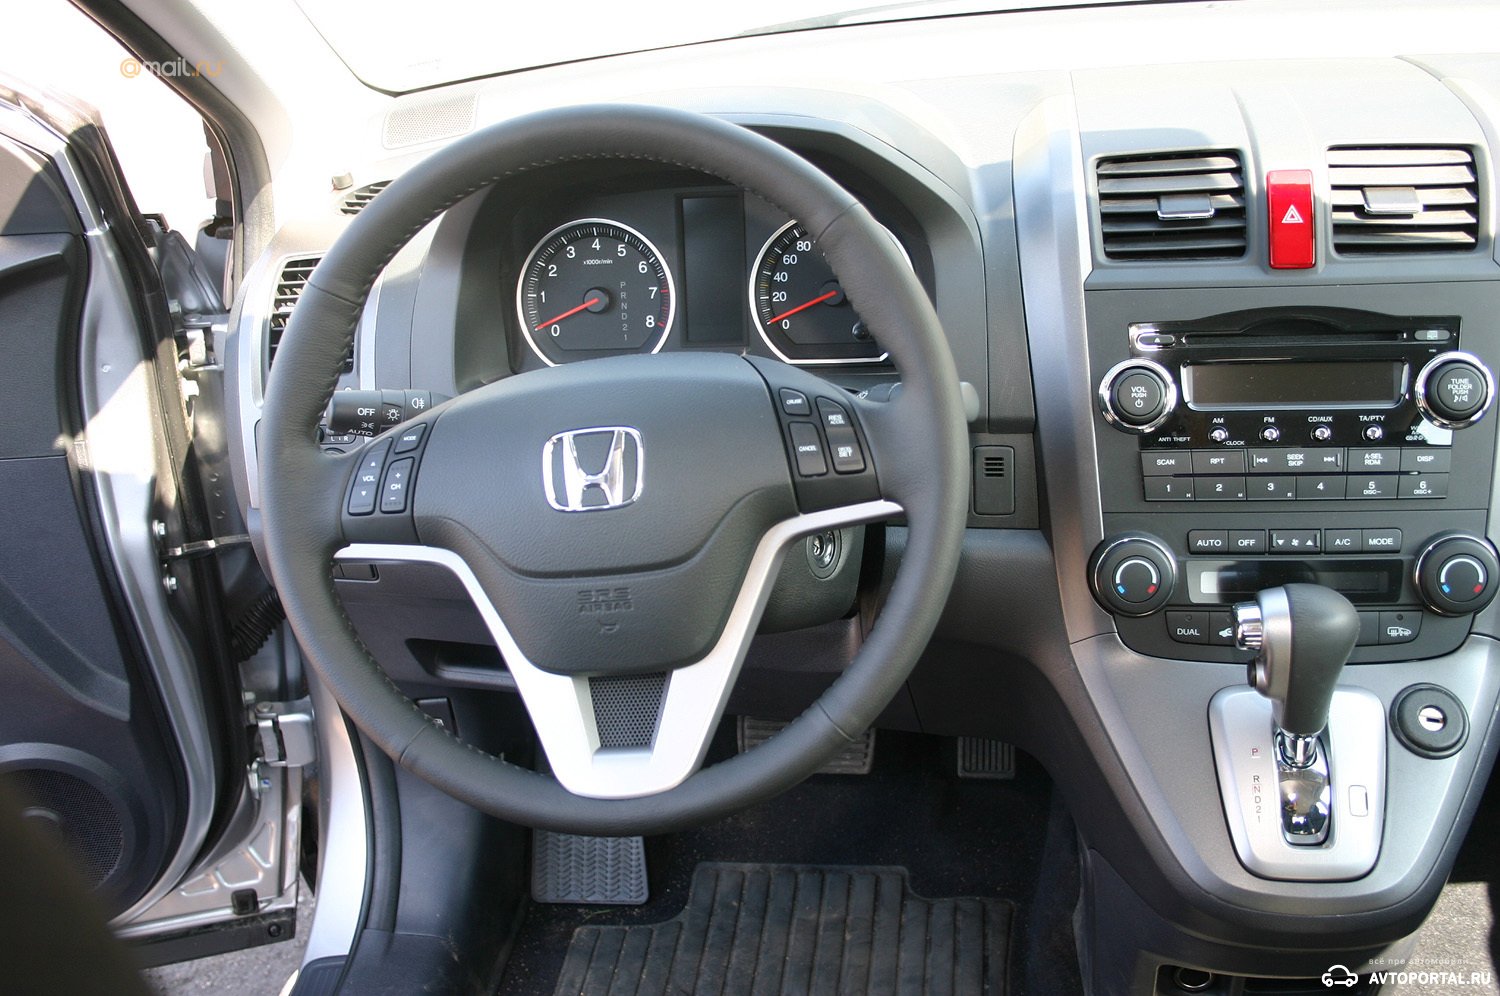 Панель honda cr v. Honda CR-V 2007 салон. Honda CRV 3 салон. Хонда СРВ 3 поколения. Торпеда Хонда СРВ 3.